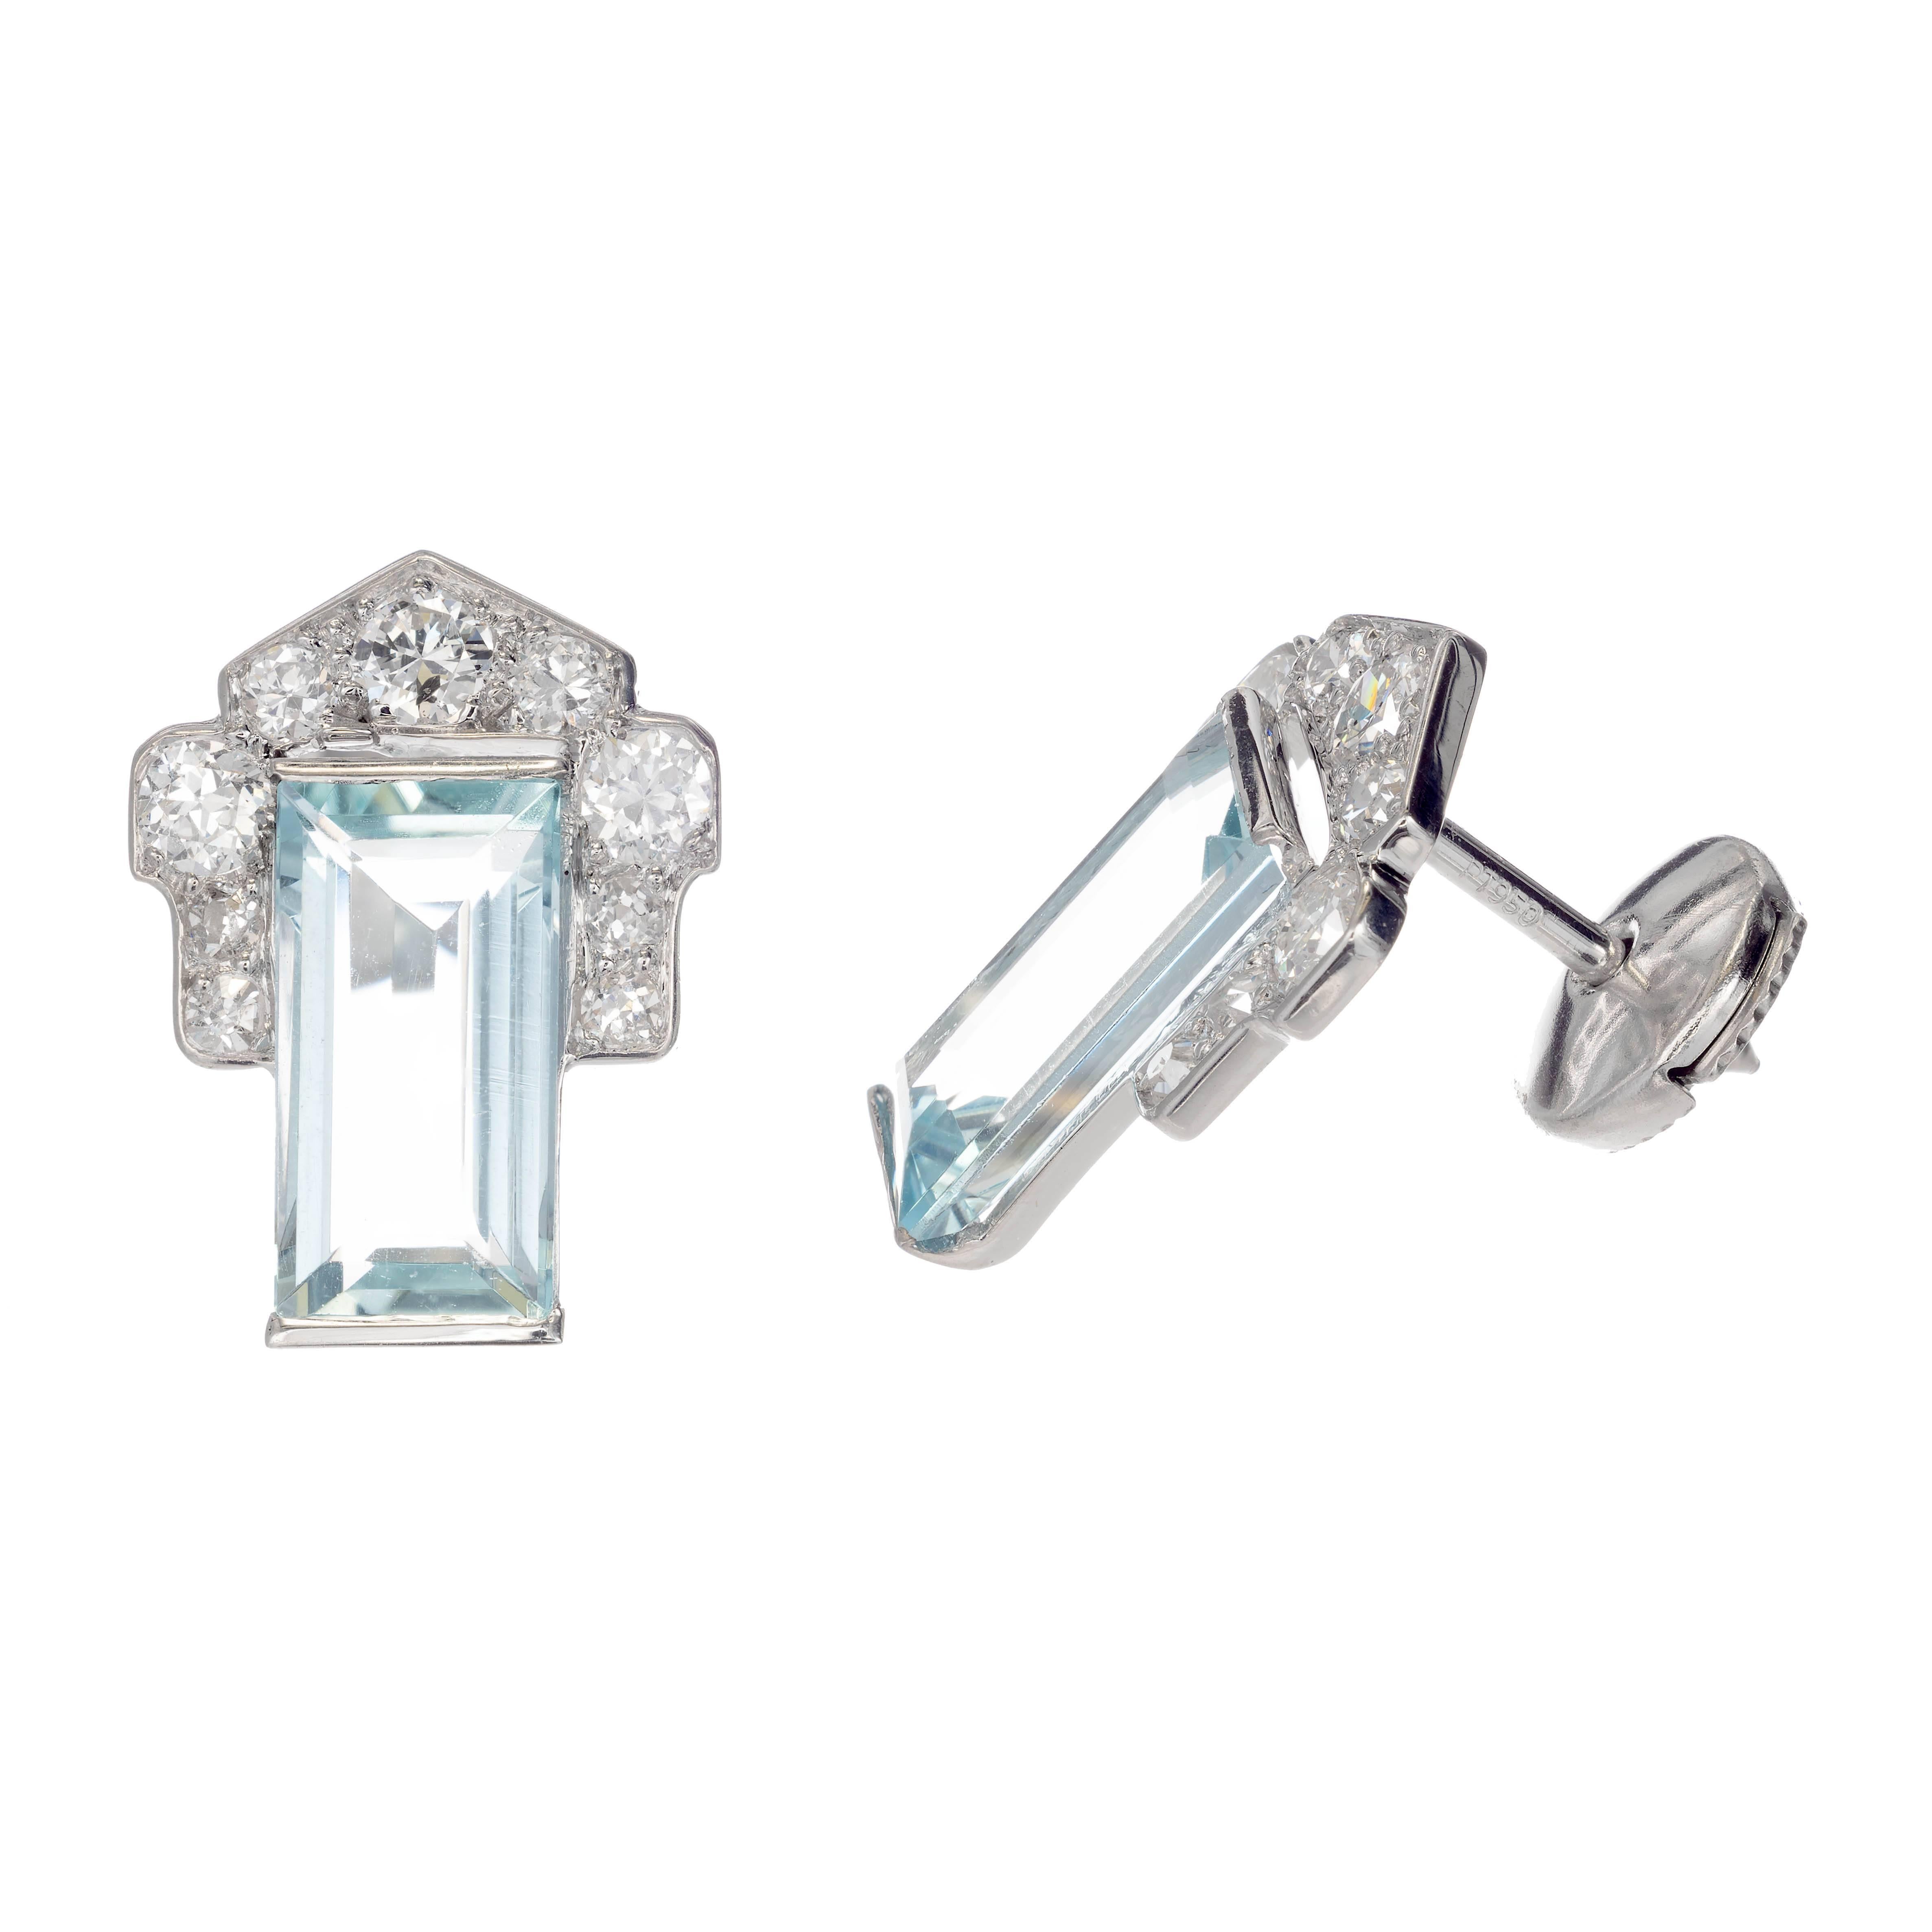 Emerald Cut 3.40 Carat Aqua Diamond Art Deco Cluster Earrings